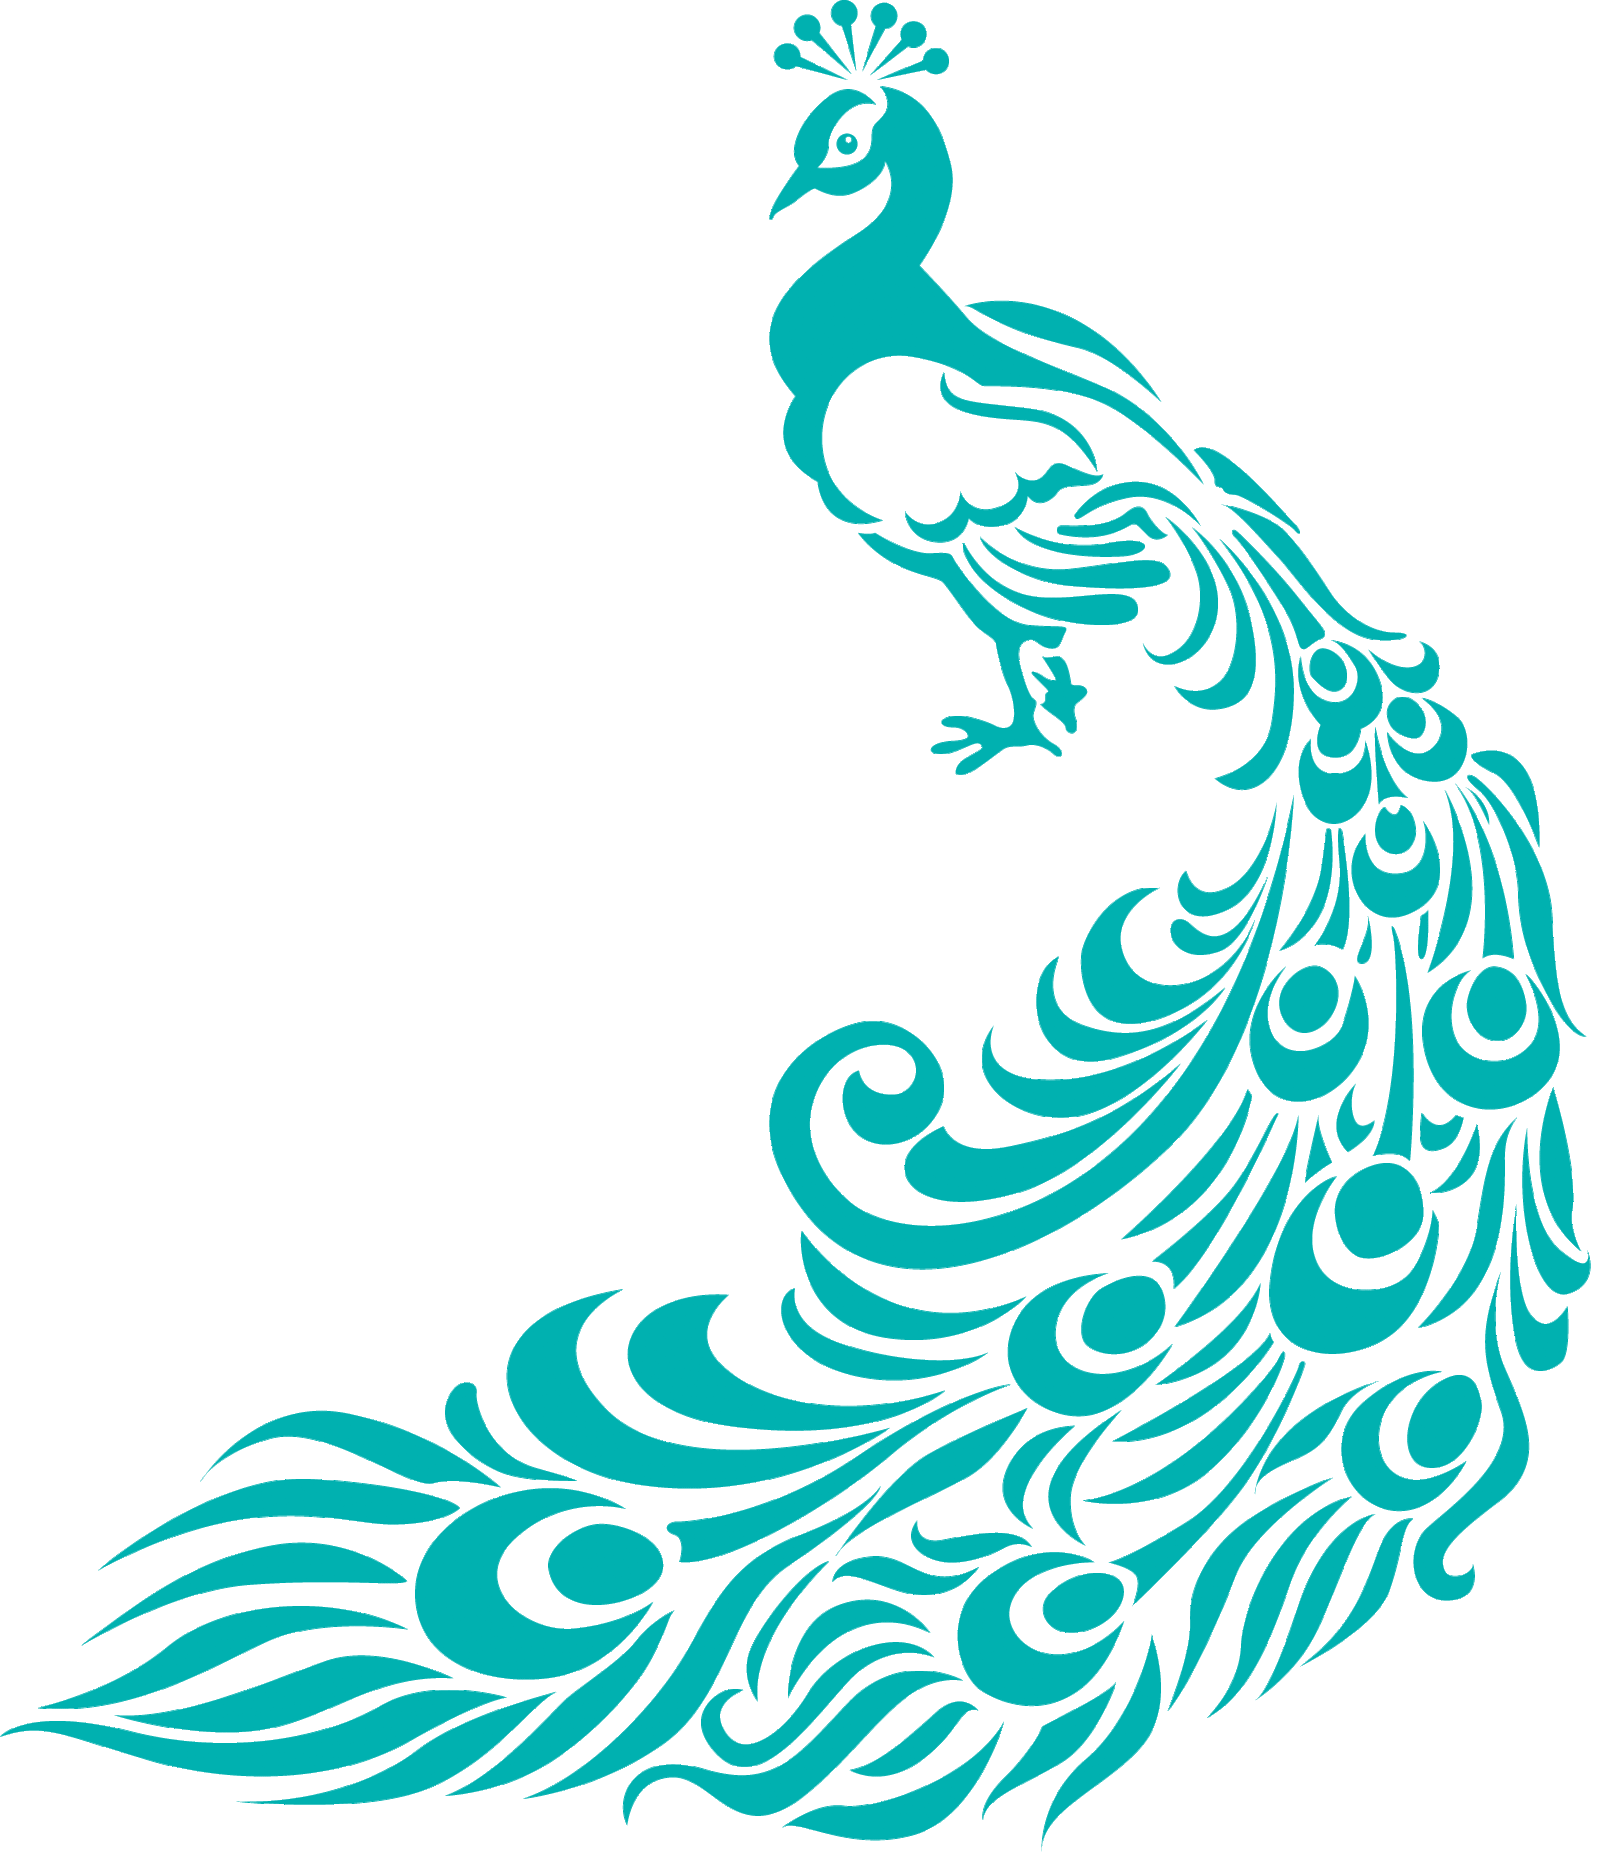 Free download peacock clipart - ClipartFox